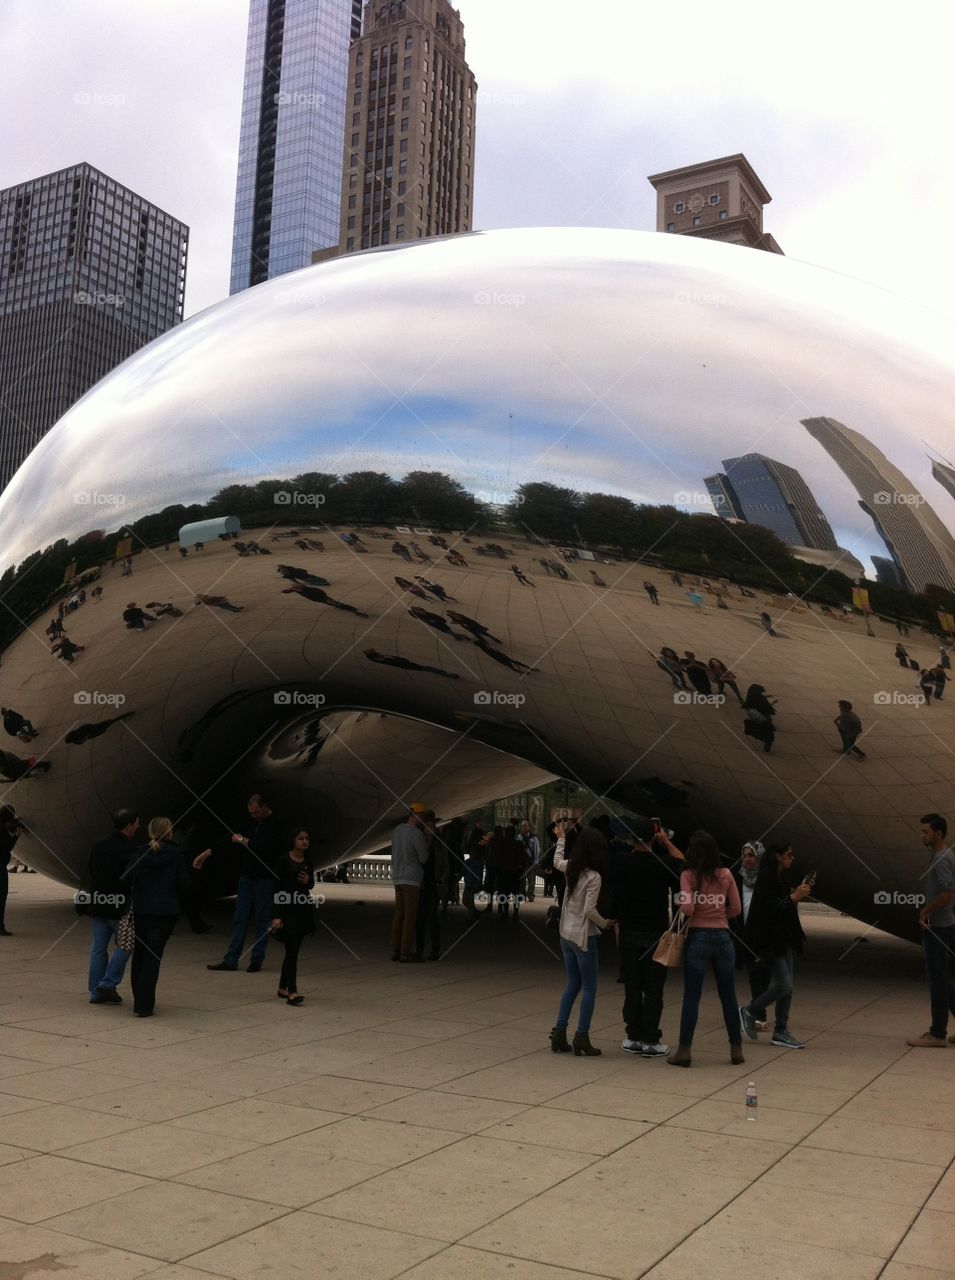 Chicago Cloud gate sculpture